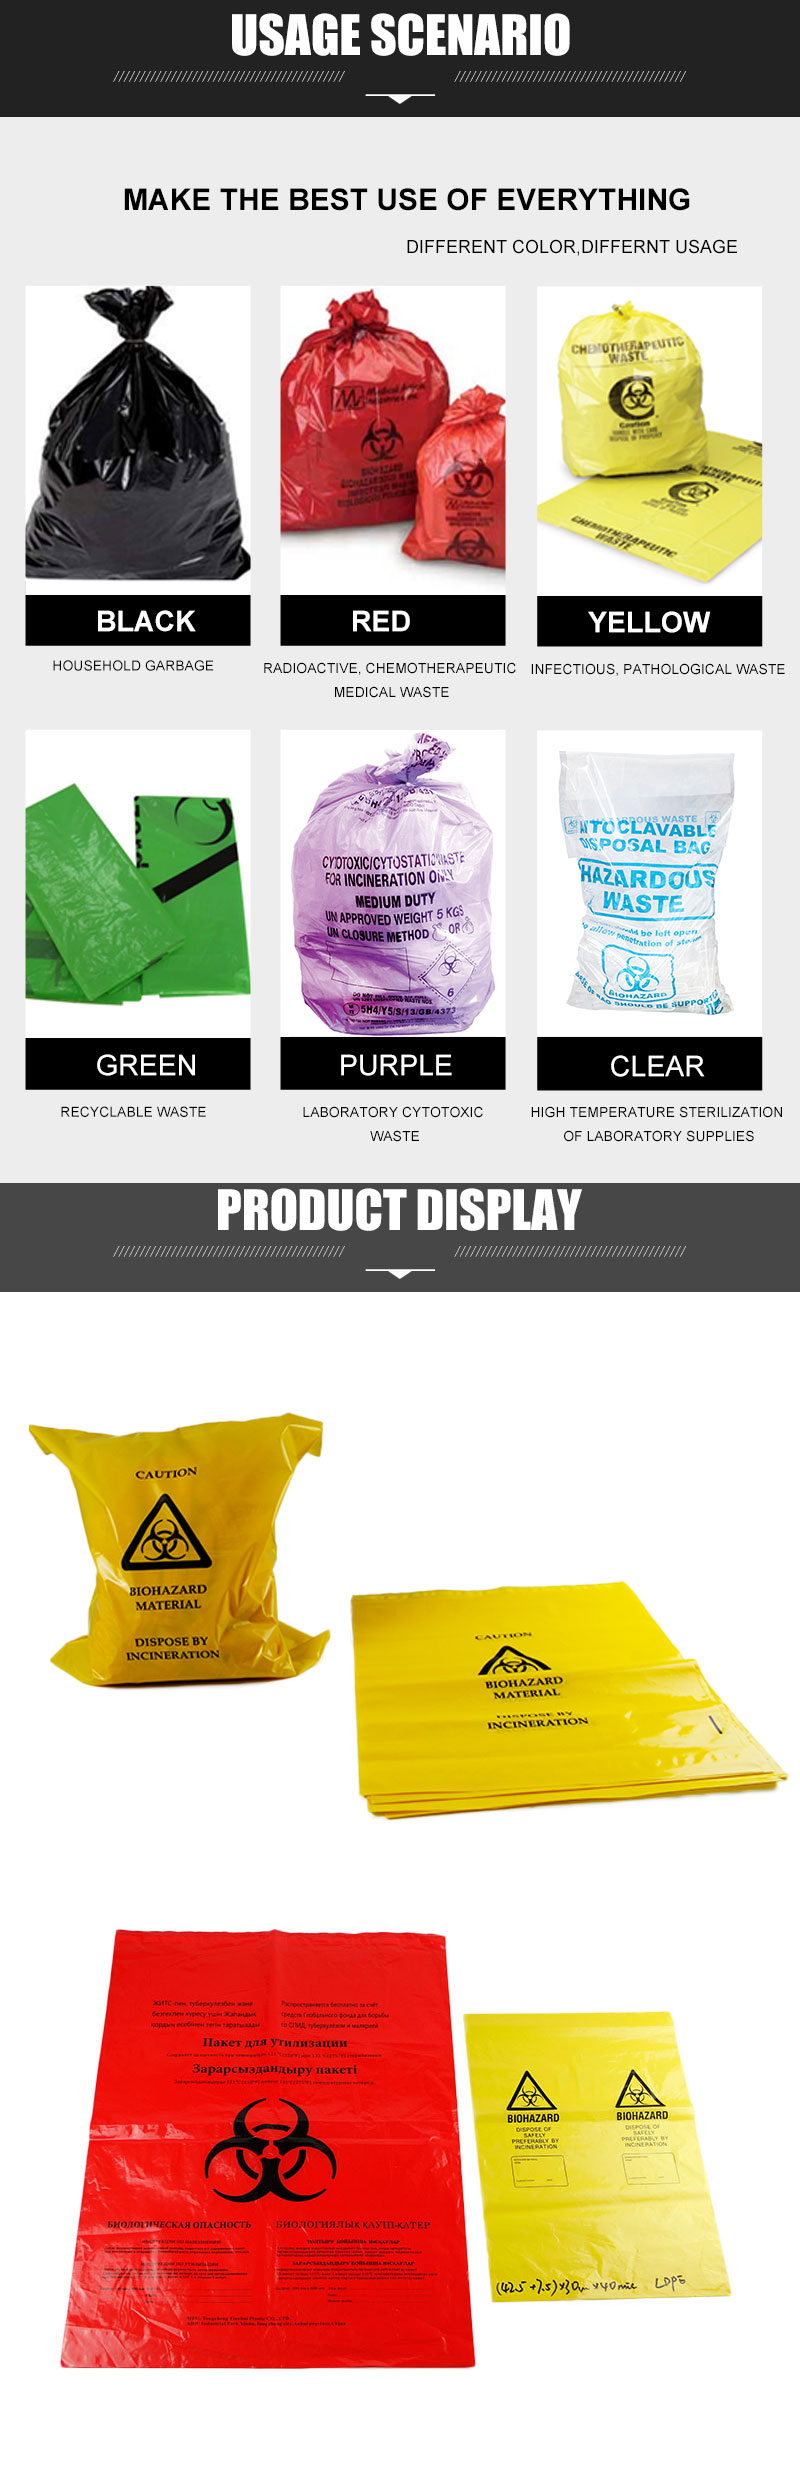 biohazard waste bag with adhesive